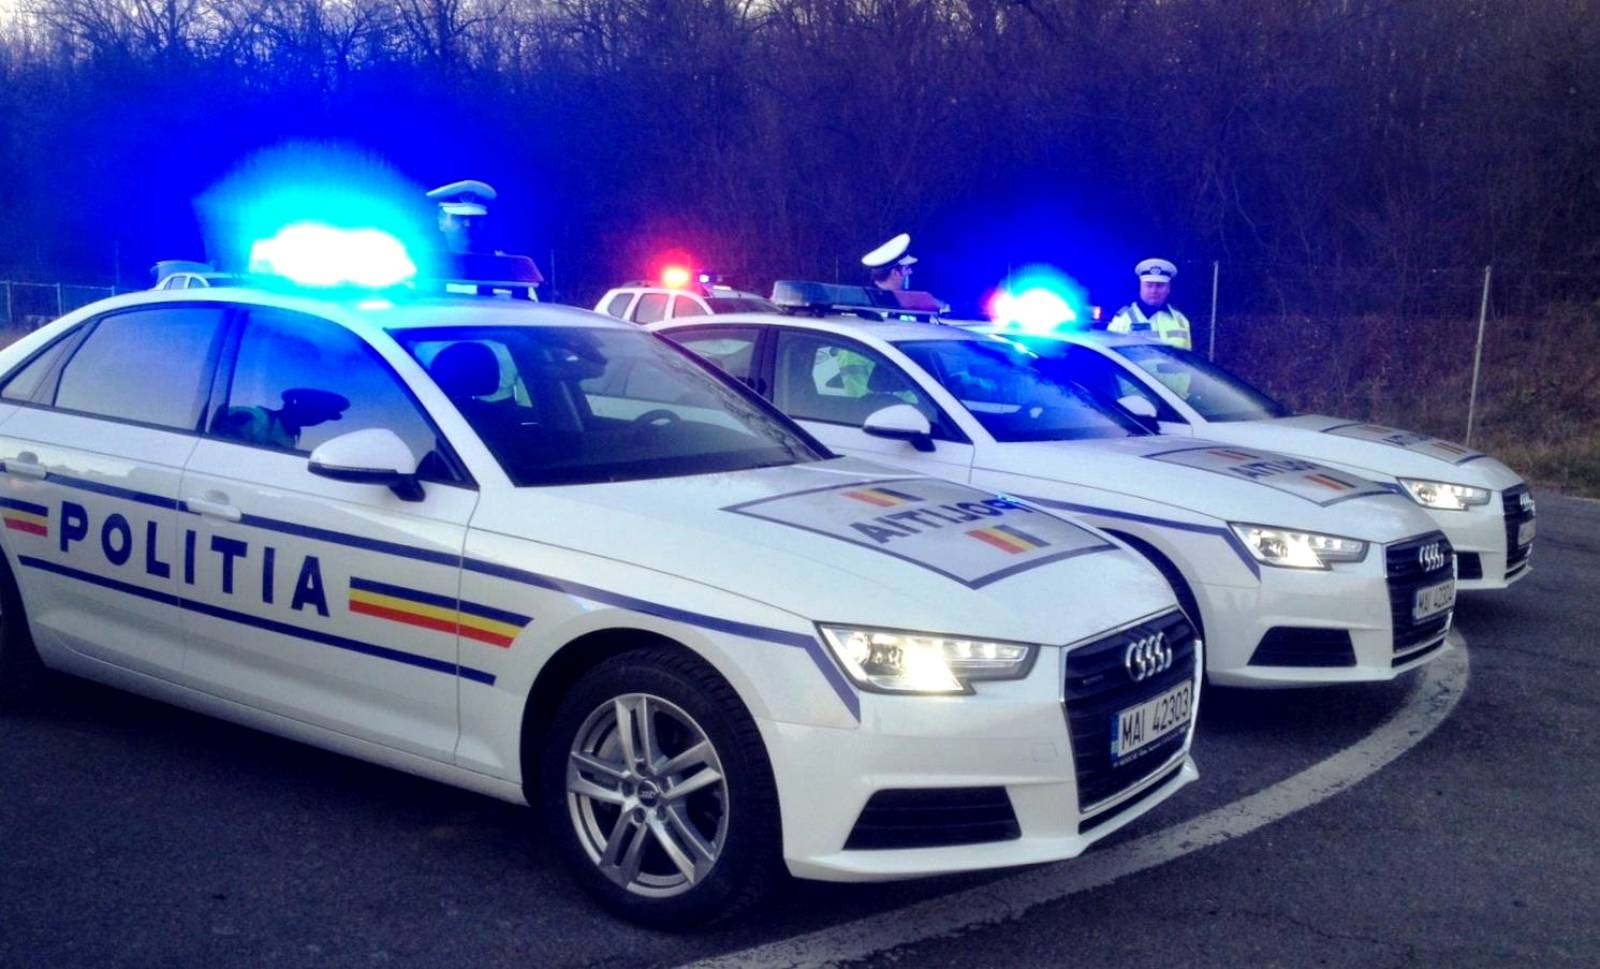 Avviso frode SMS della polizia rumena